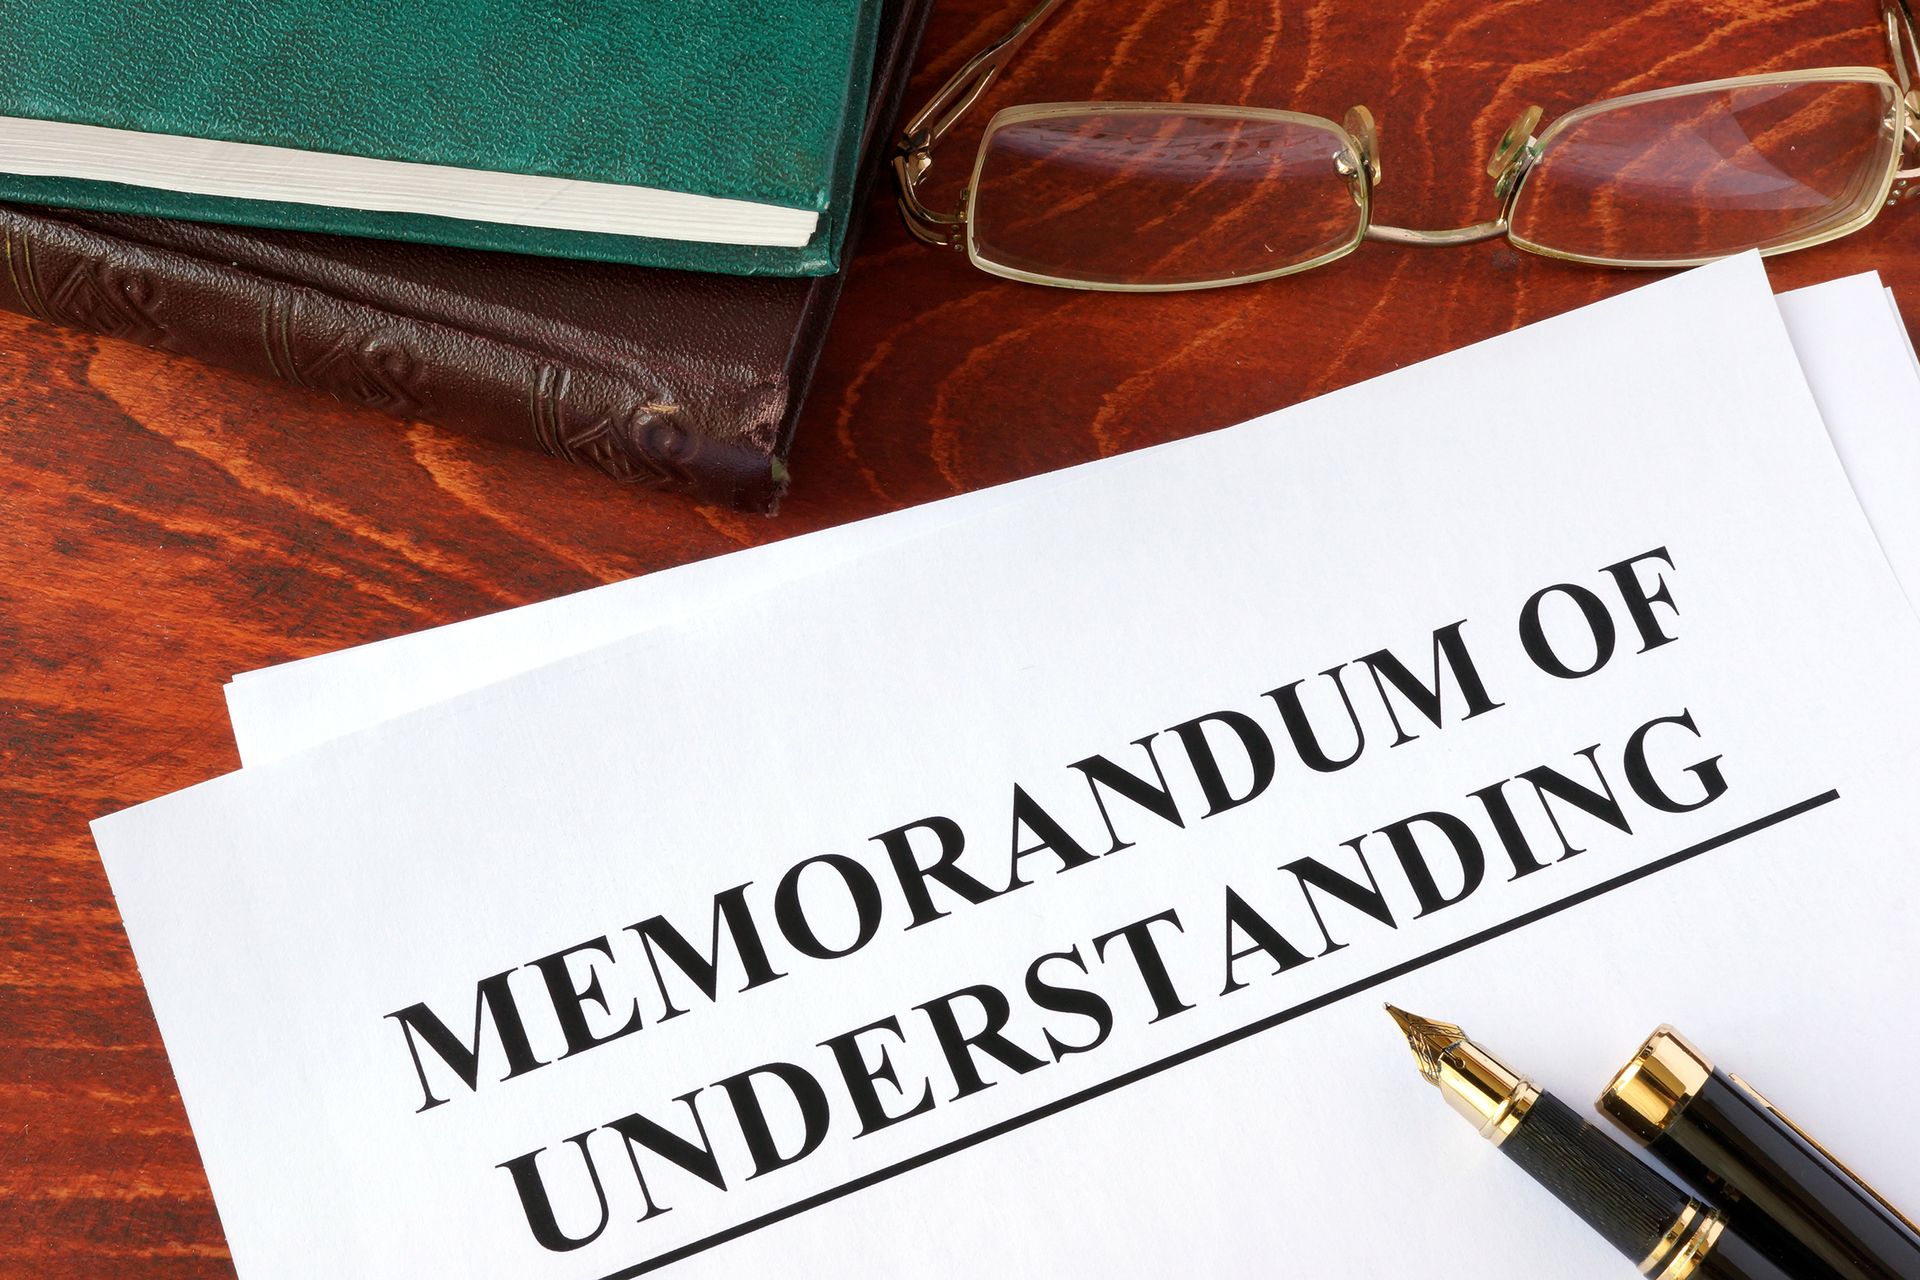 A memorandum of understanding is sitting on a wooden table.